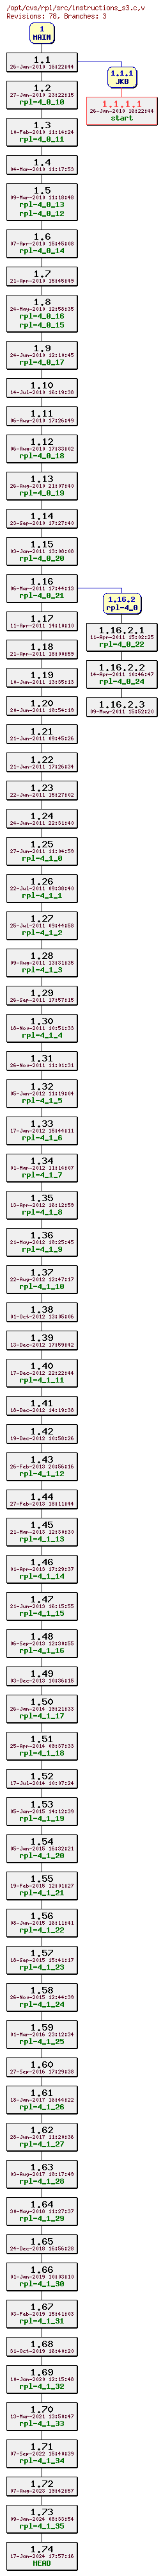 Revision graph of rpl/src/instructions_s3.c